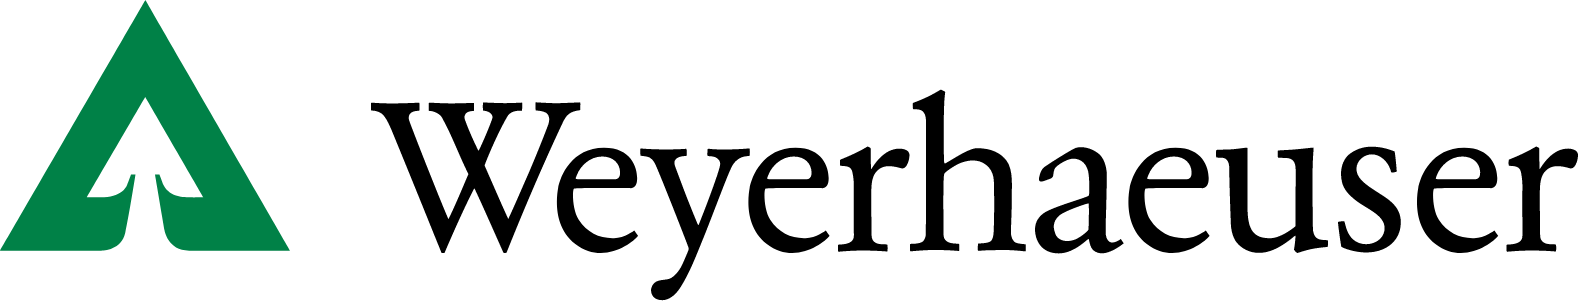 Weyerhaeuser
 logo large (transparent PNG)